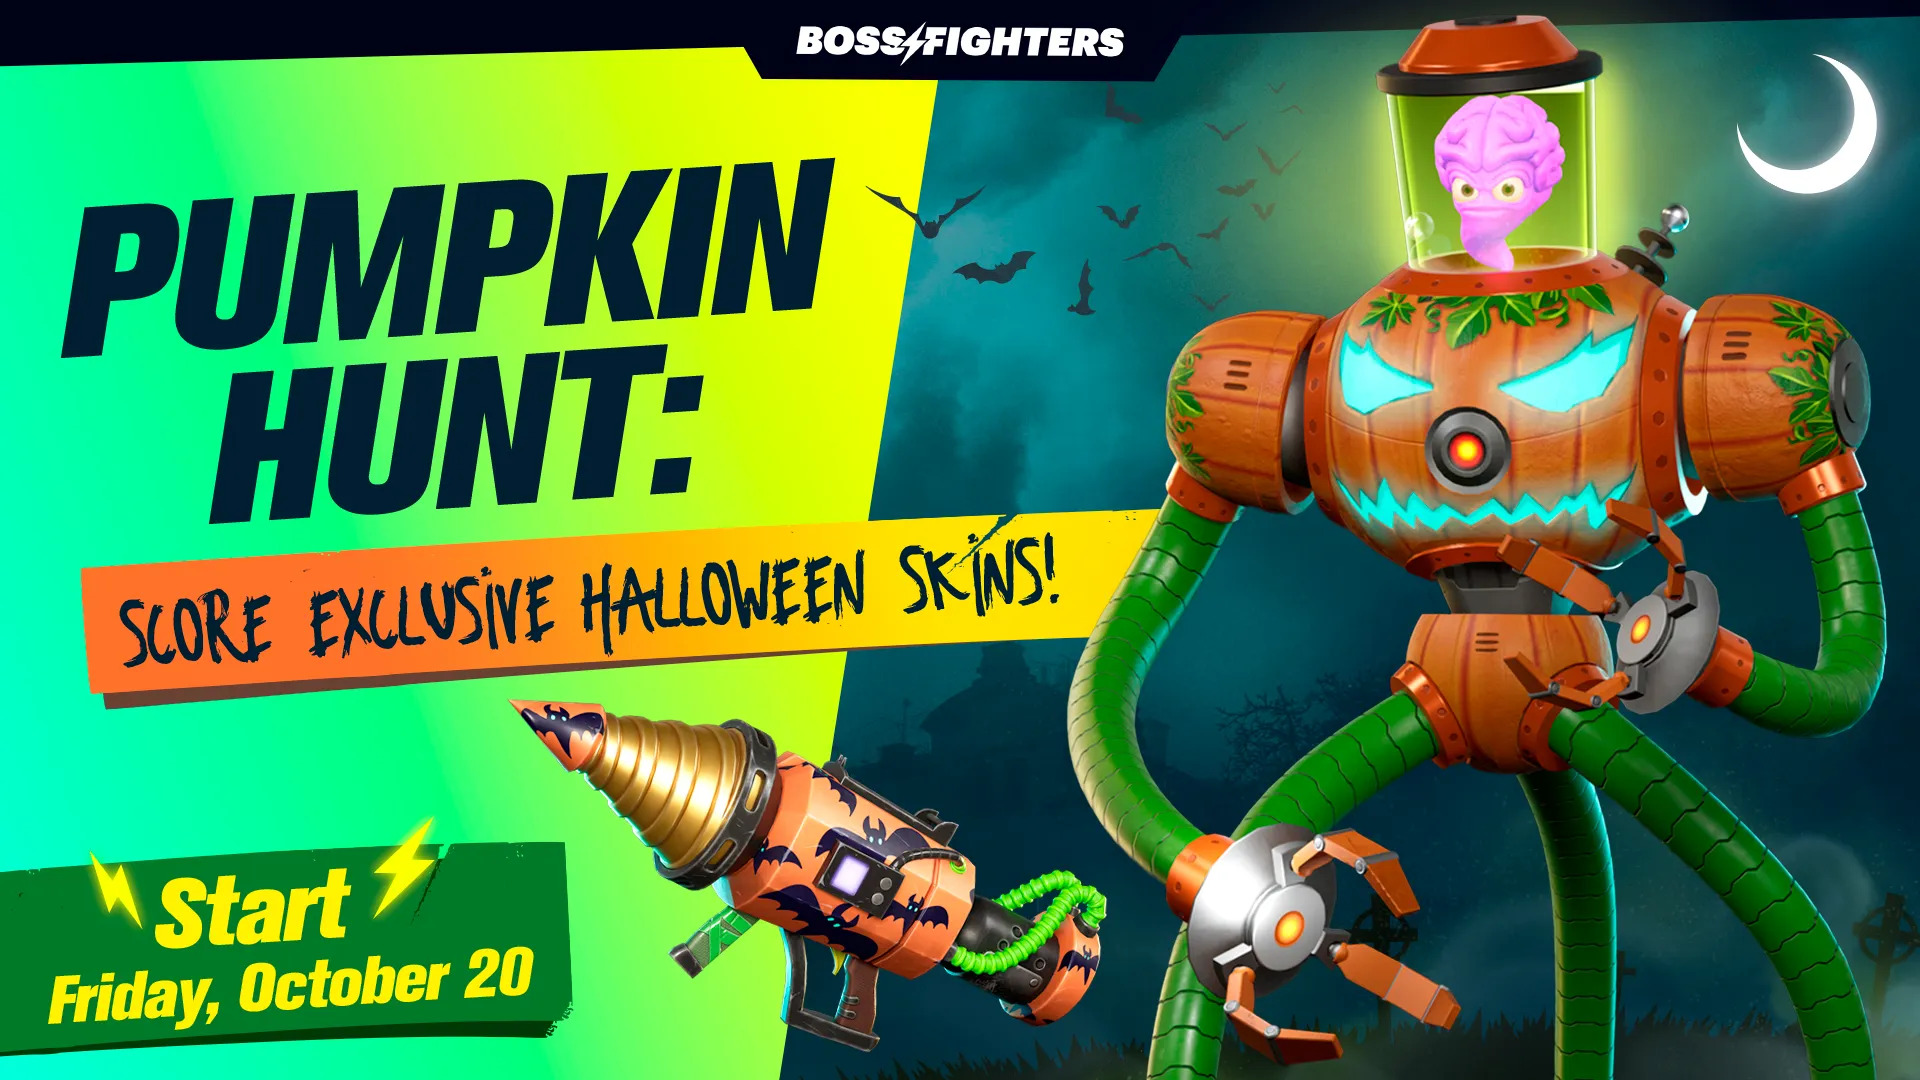 Earn Exclusive Boss Fighters Halloween Skins